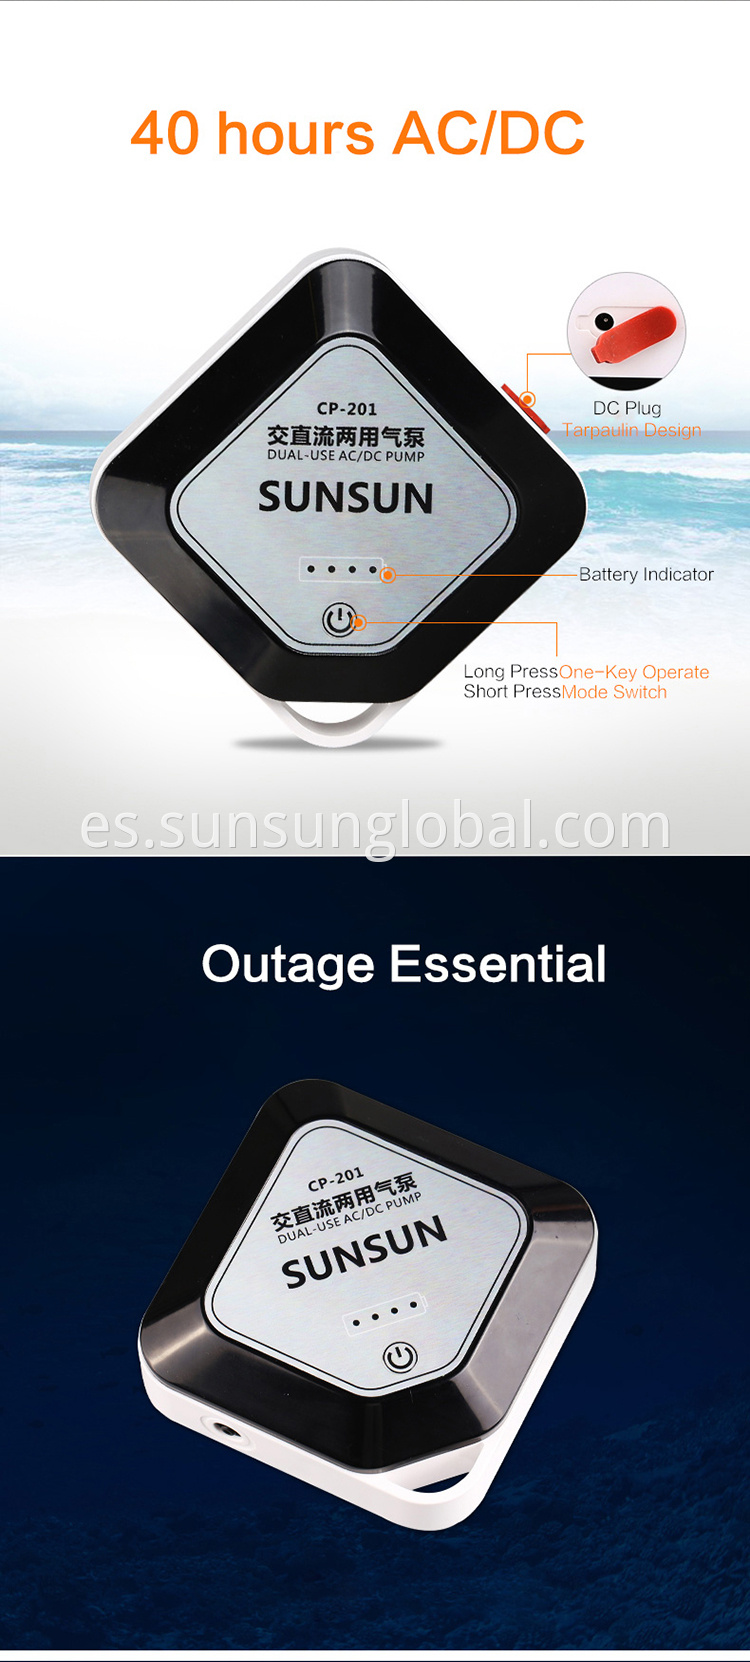 Mini bomba de aire de CC Sunsun para acuario eléctrico